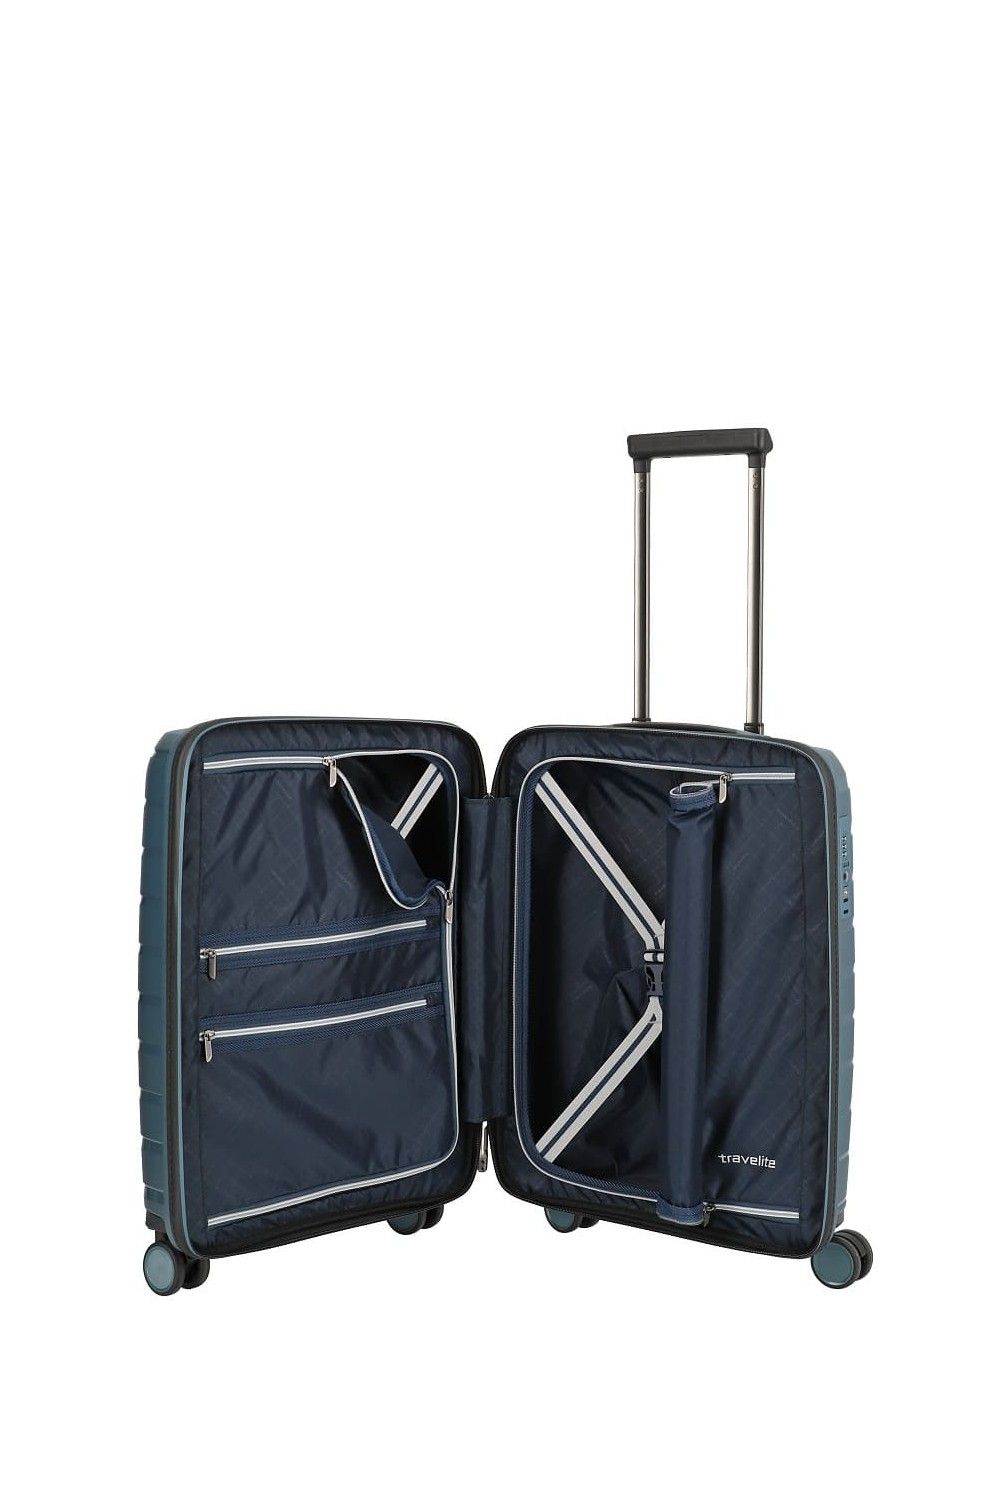 Hand luggage Air Base Travelite 55x40x20 cm 4 wheel